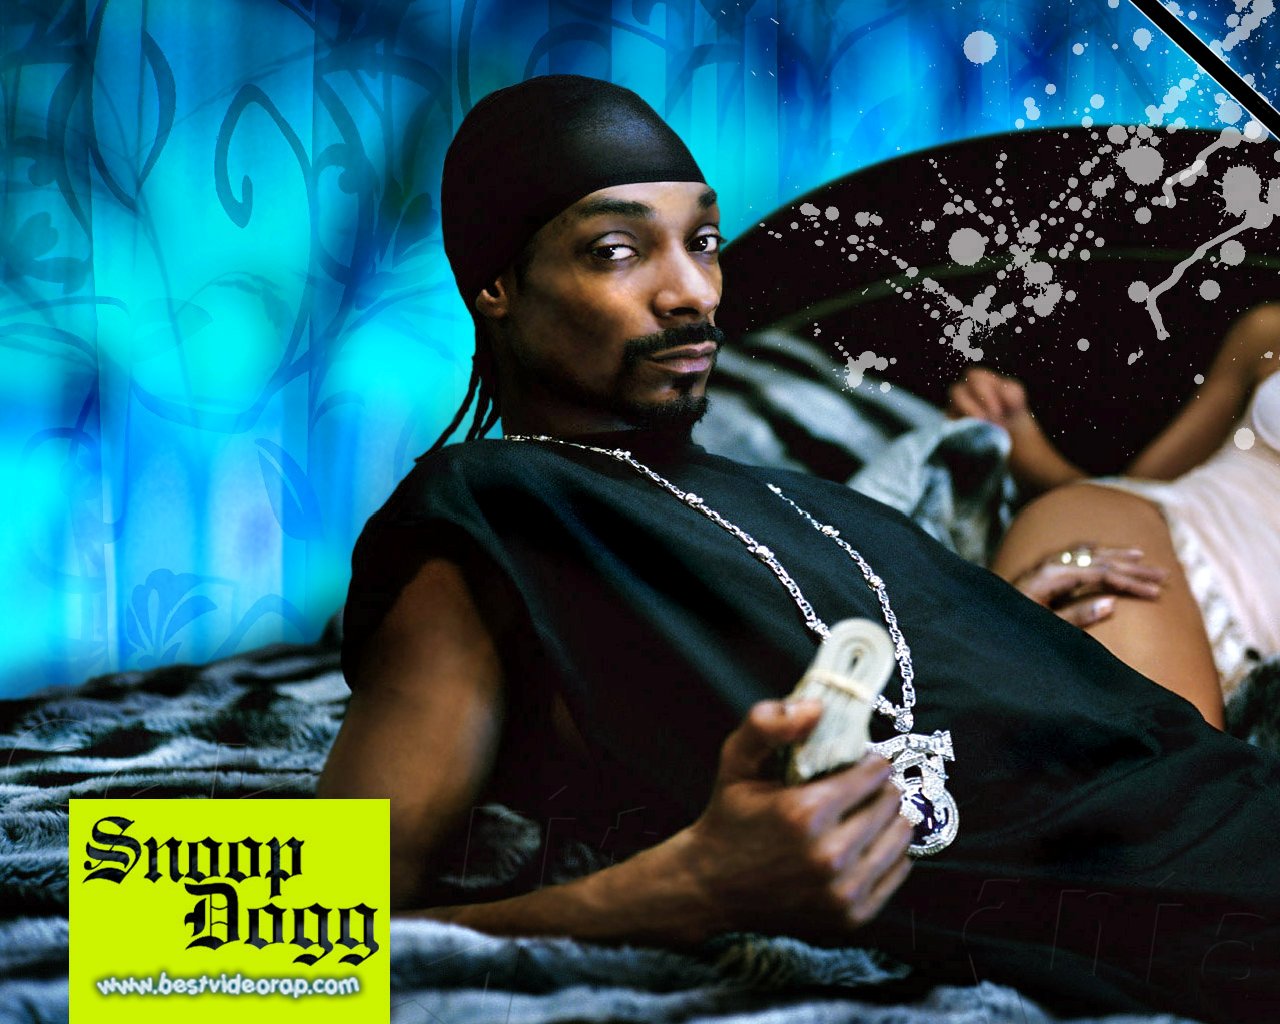 snoop dogg wallpaper,rapper,musik ,cool,hip hop musik,album cover